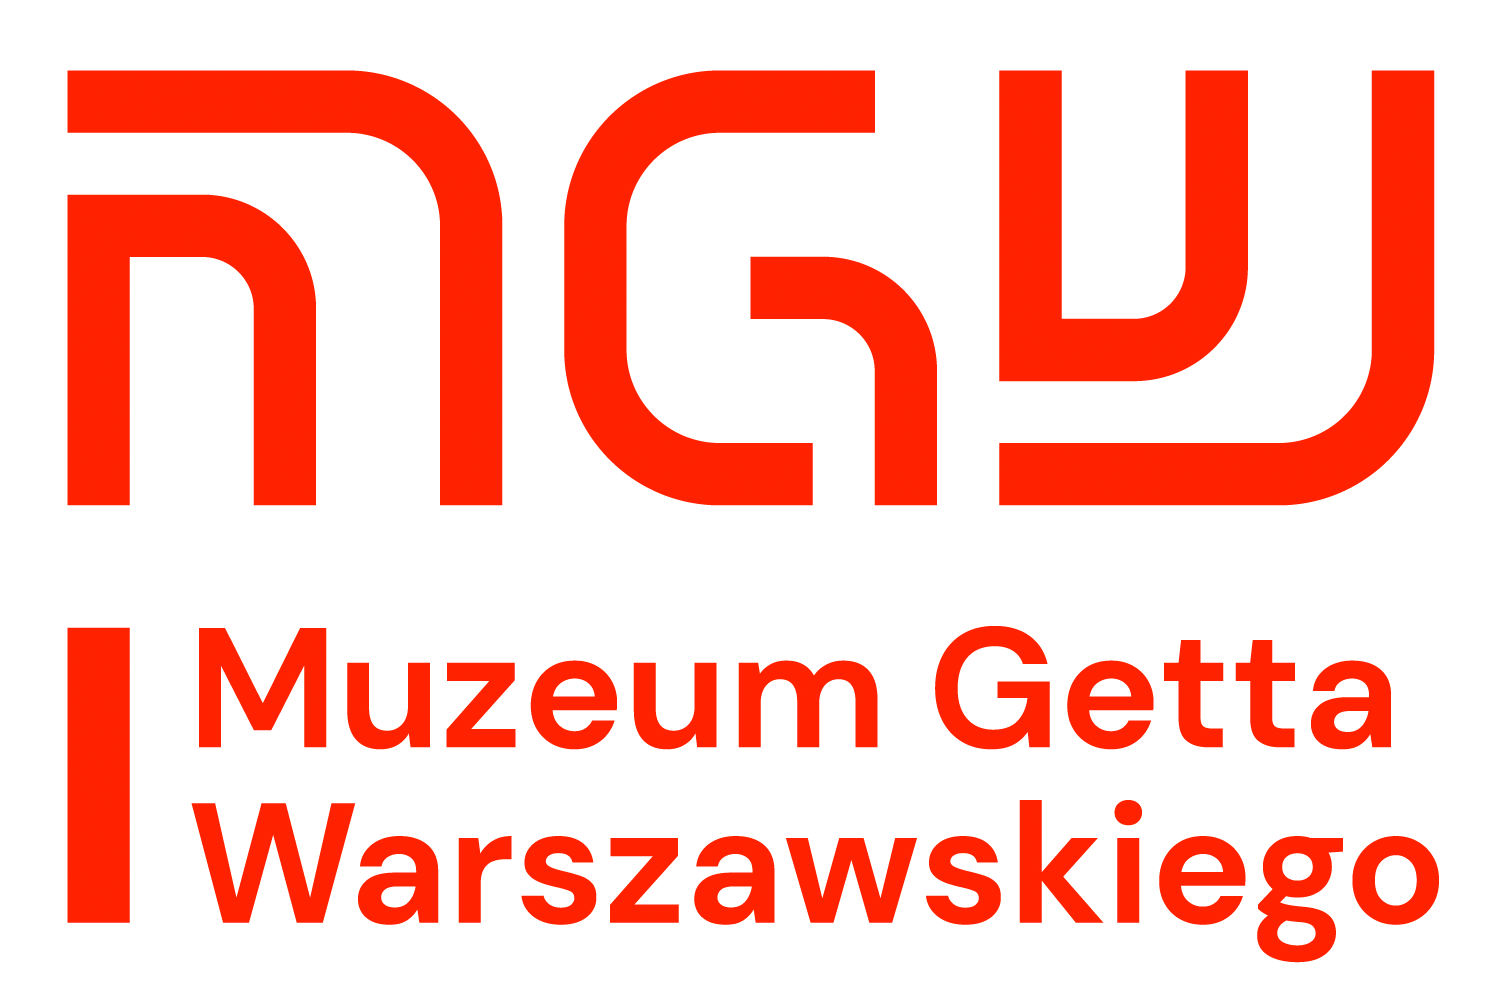 New Logo and Identity for Warsaw Ghetto Museum by DADADA studio